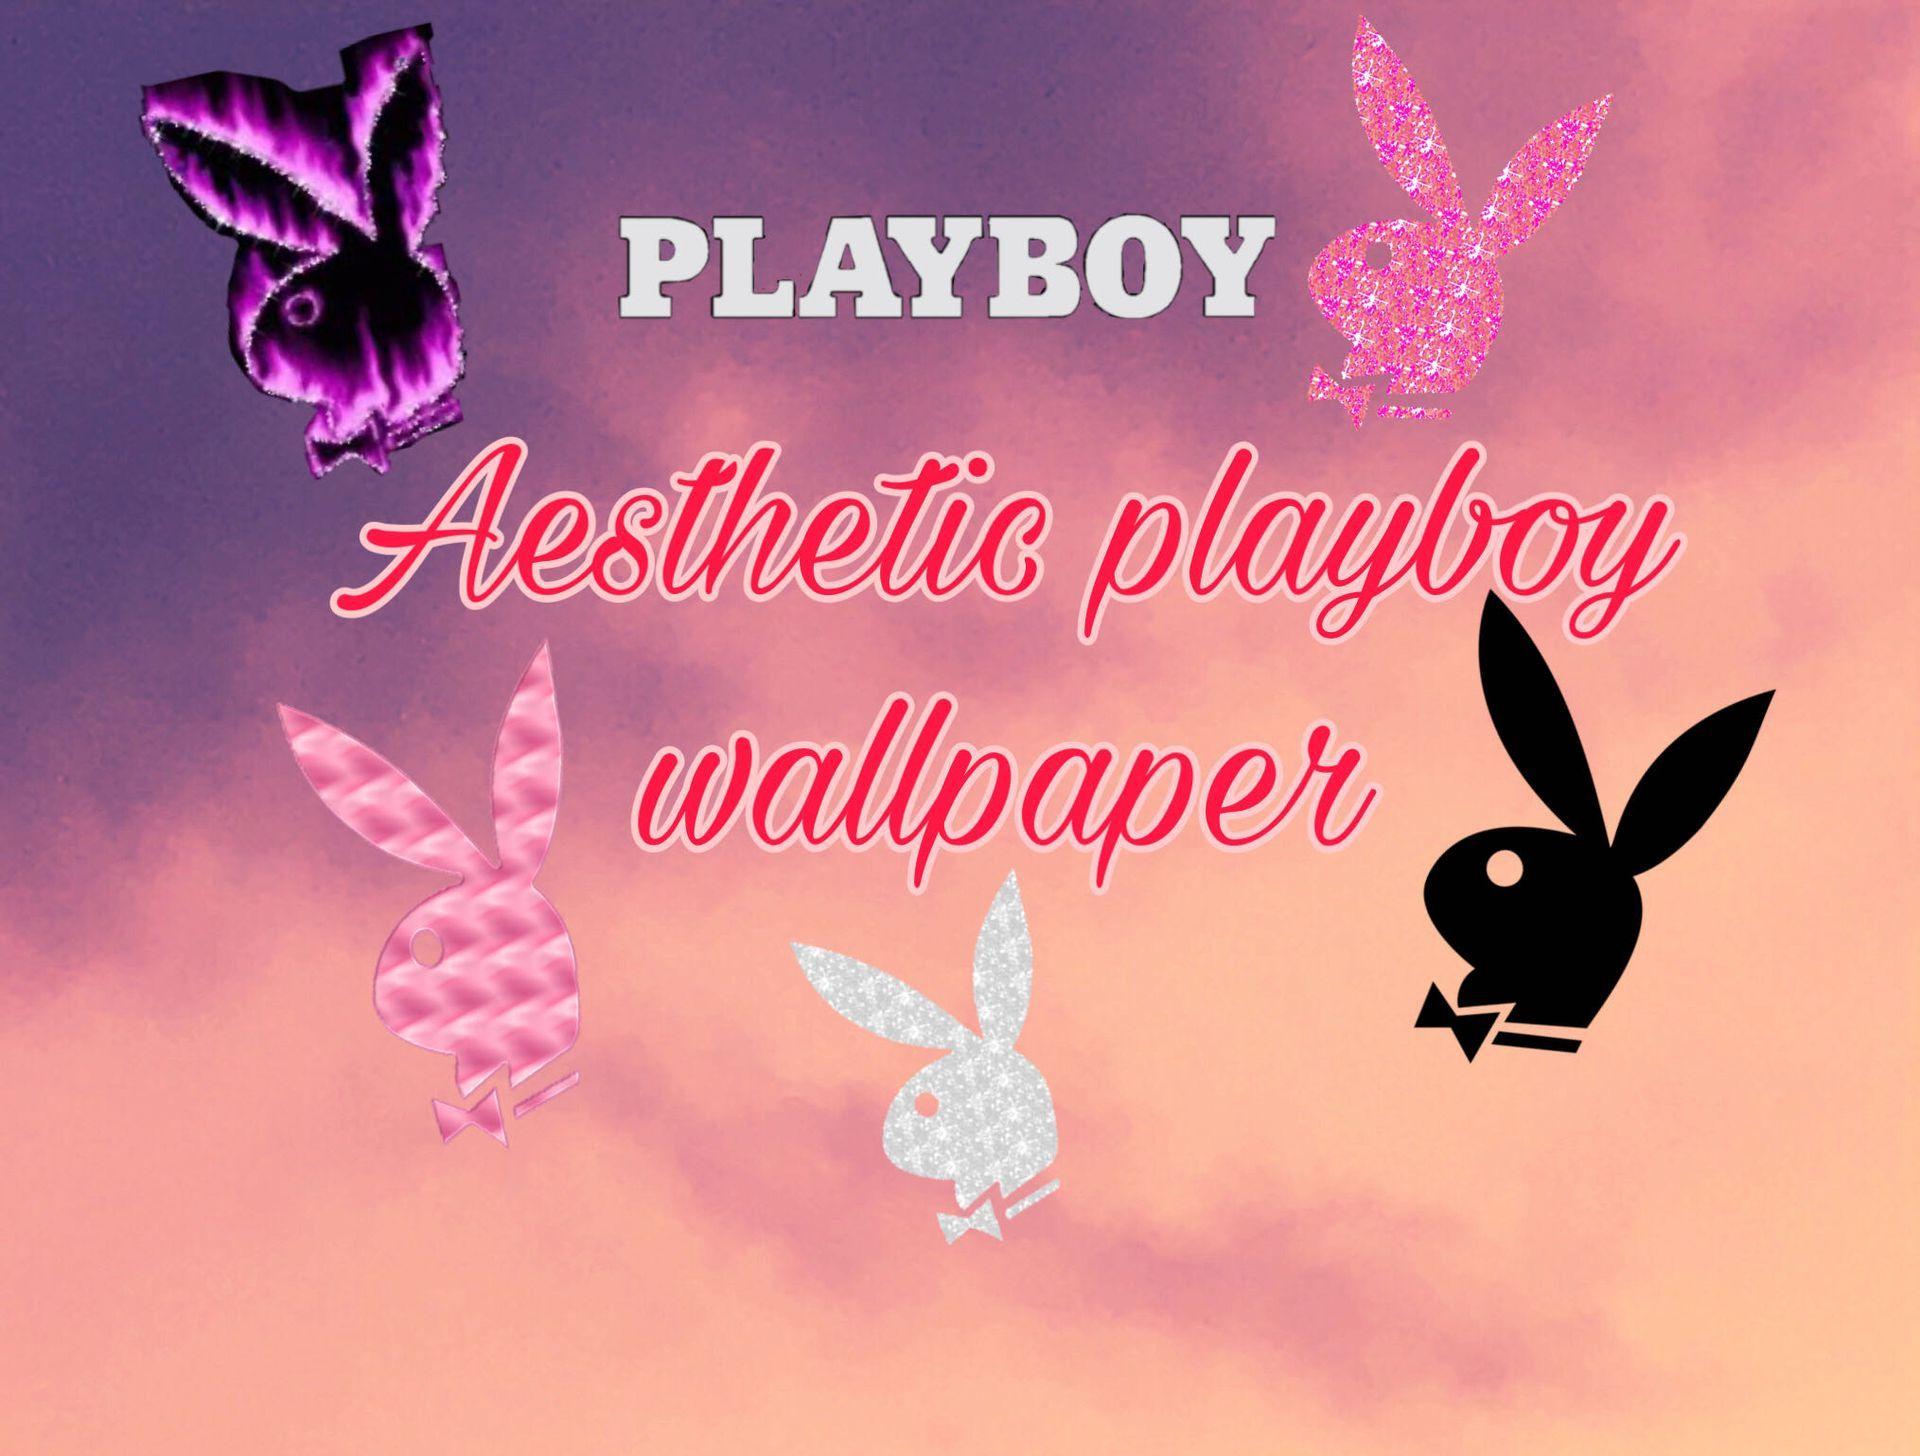 Download Aesthetic Playboy LV Wallpaper